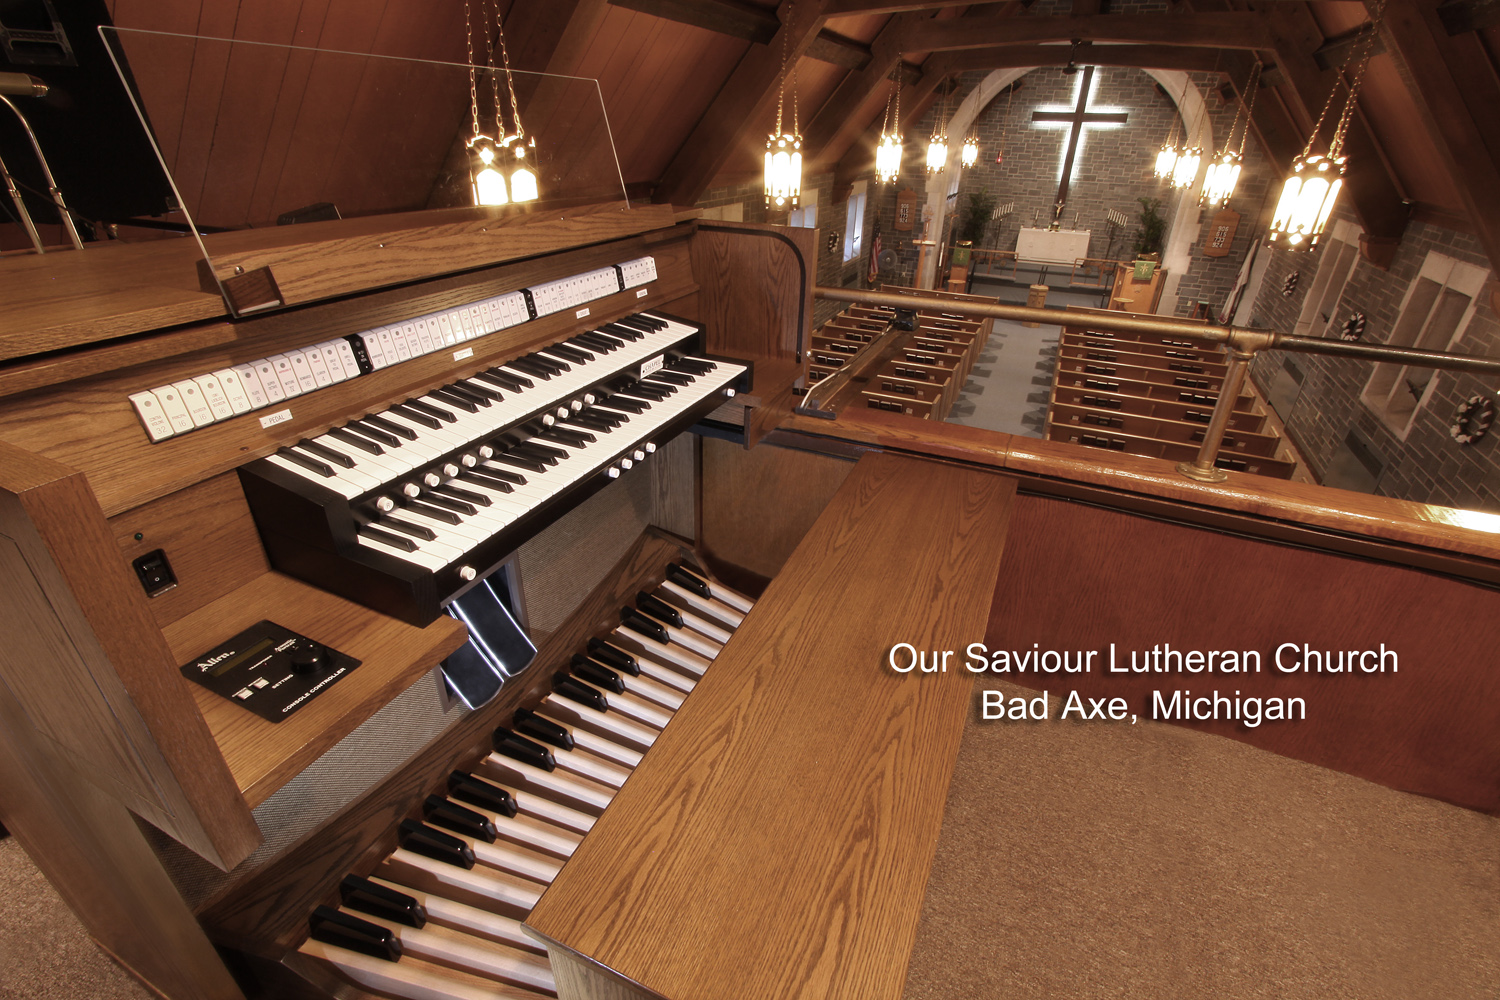 Our Savior Lutheran Church, Bad Axe, Michigan